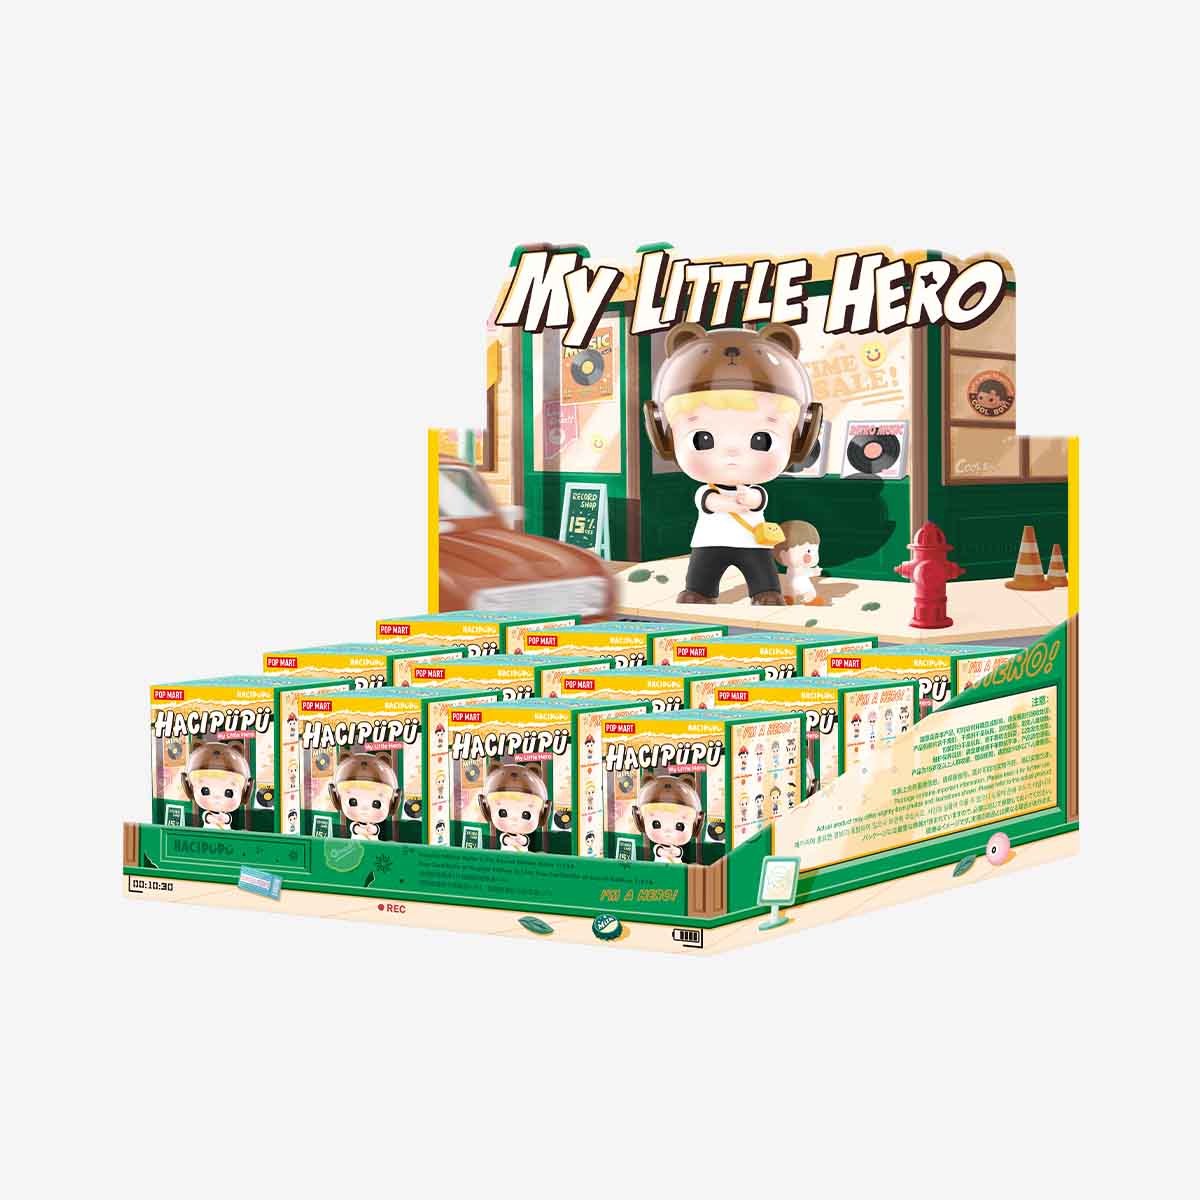 【New】Pop Mart HACIPUPU My Little Hero Series Blind Box Random Style